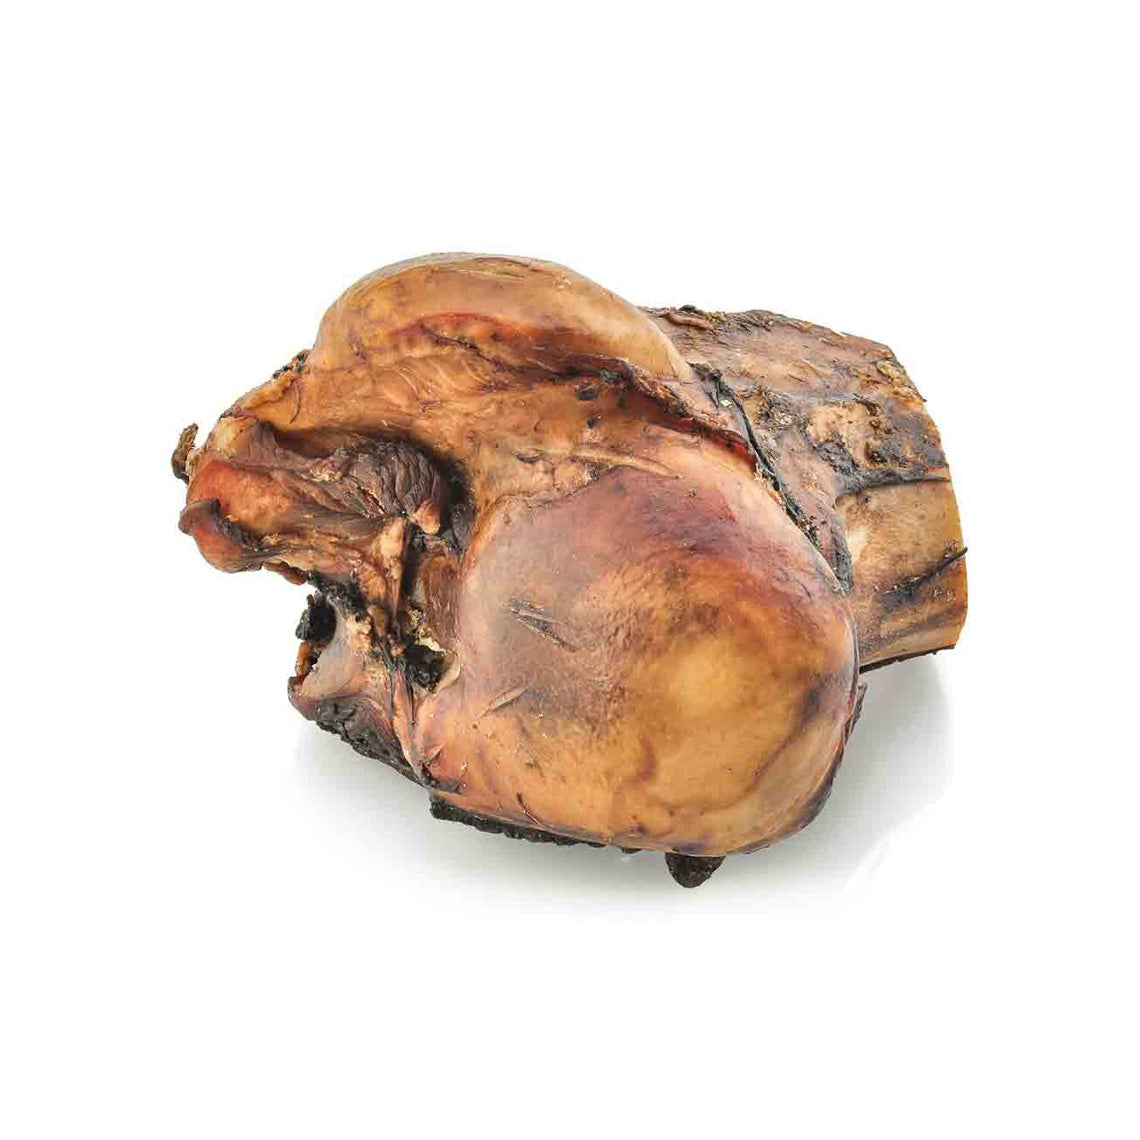 are roasted knuckle bones safe for dogs